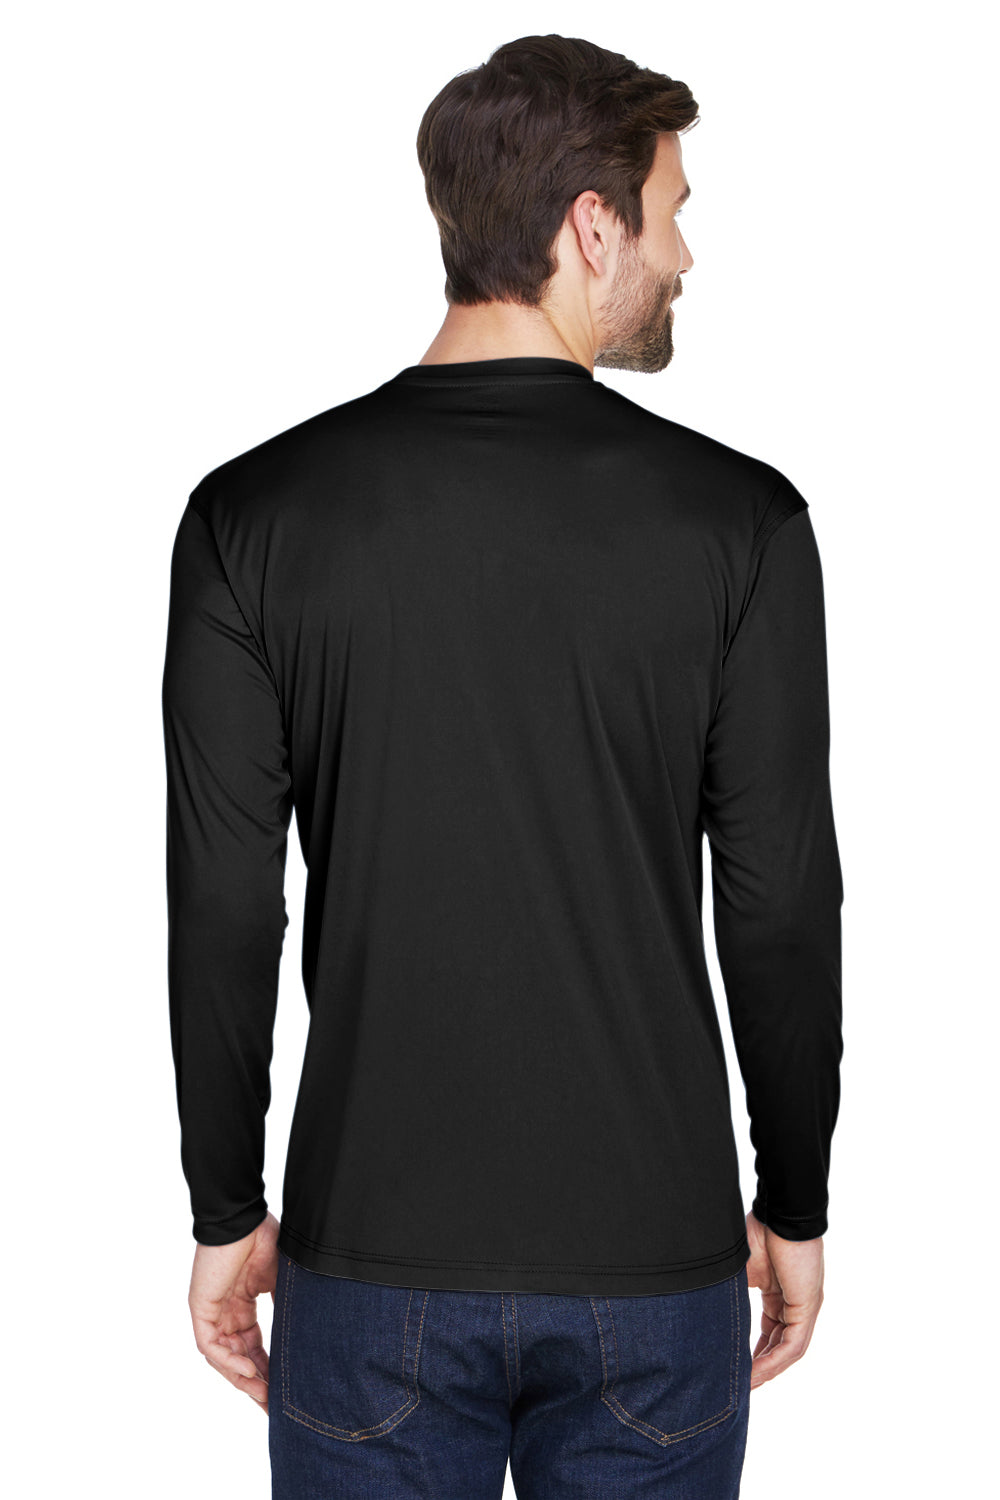 UltraClub 8422 Mens Cool & Dry Performance Moisture Wicking Long Sleeve Crewneck T-Shirt Black Back